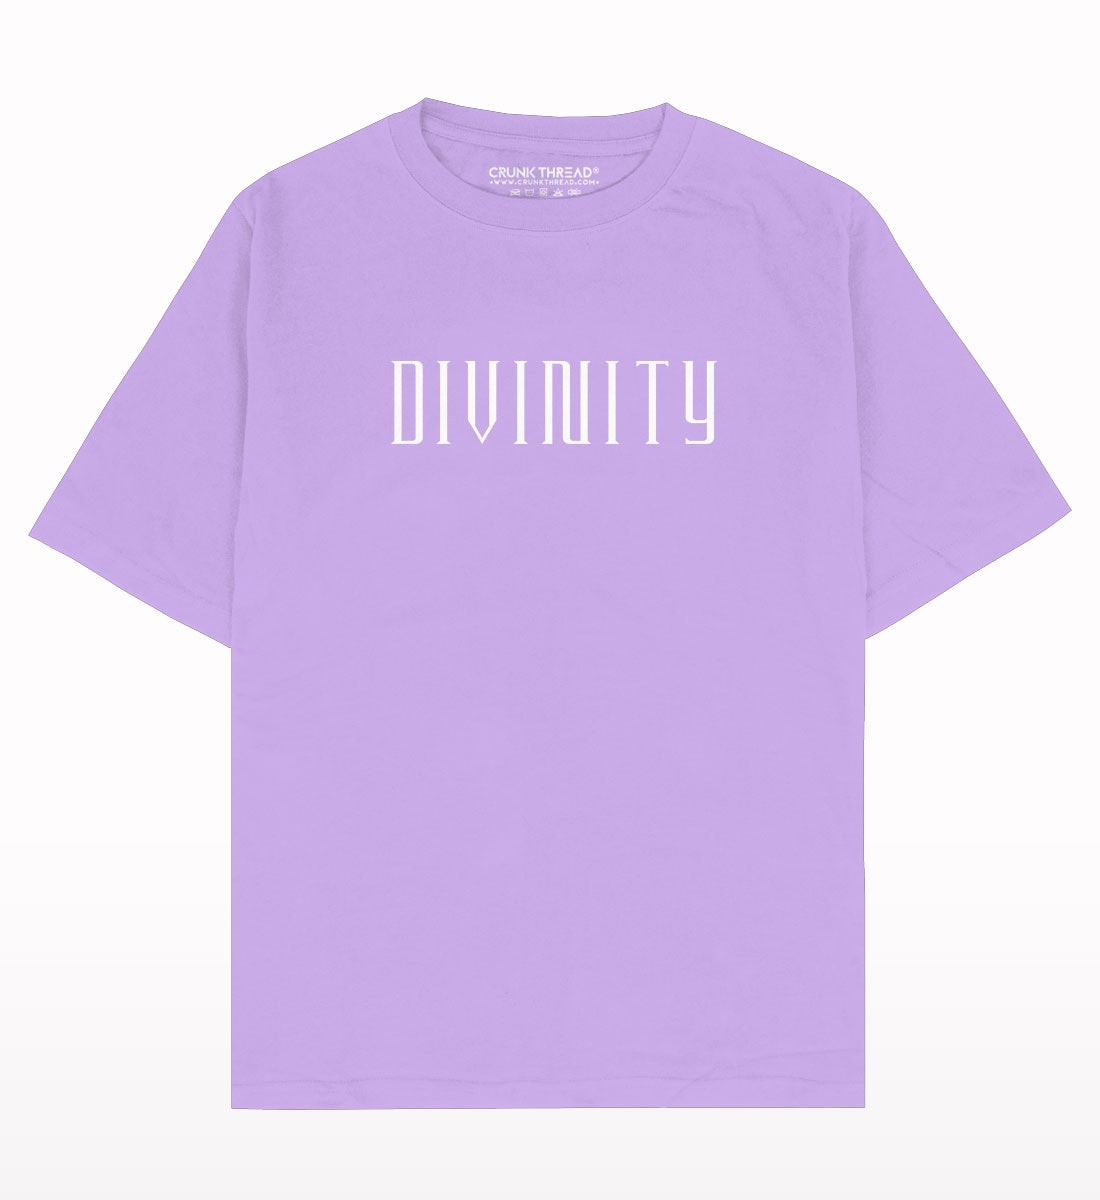 Divinity Oversized T-shirt - Crunkthread.com